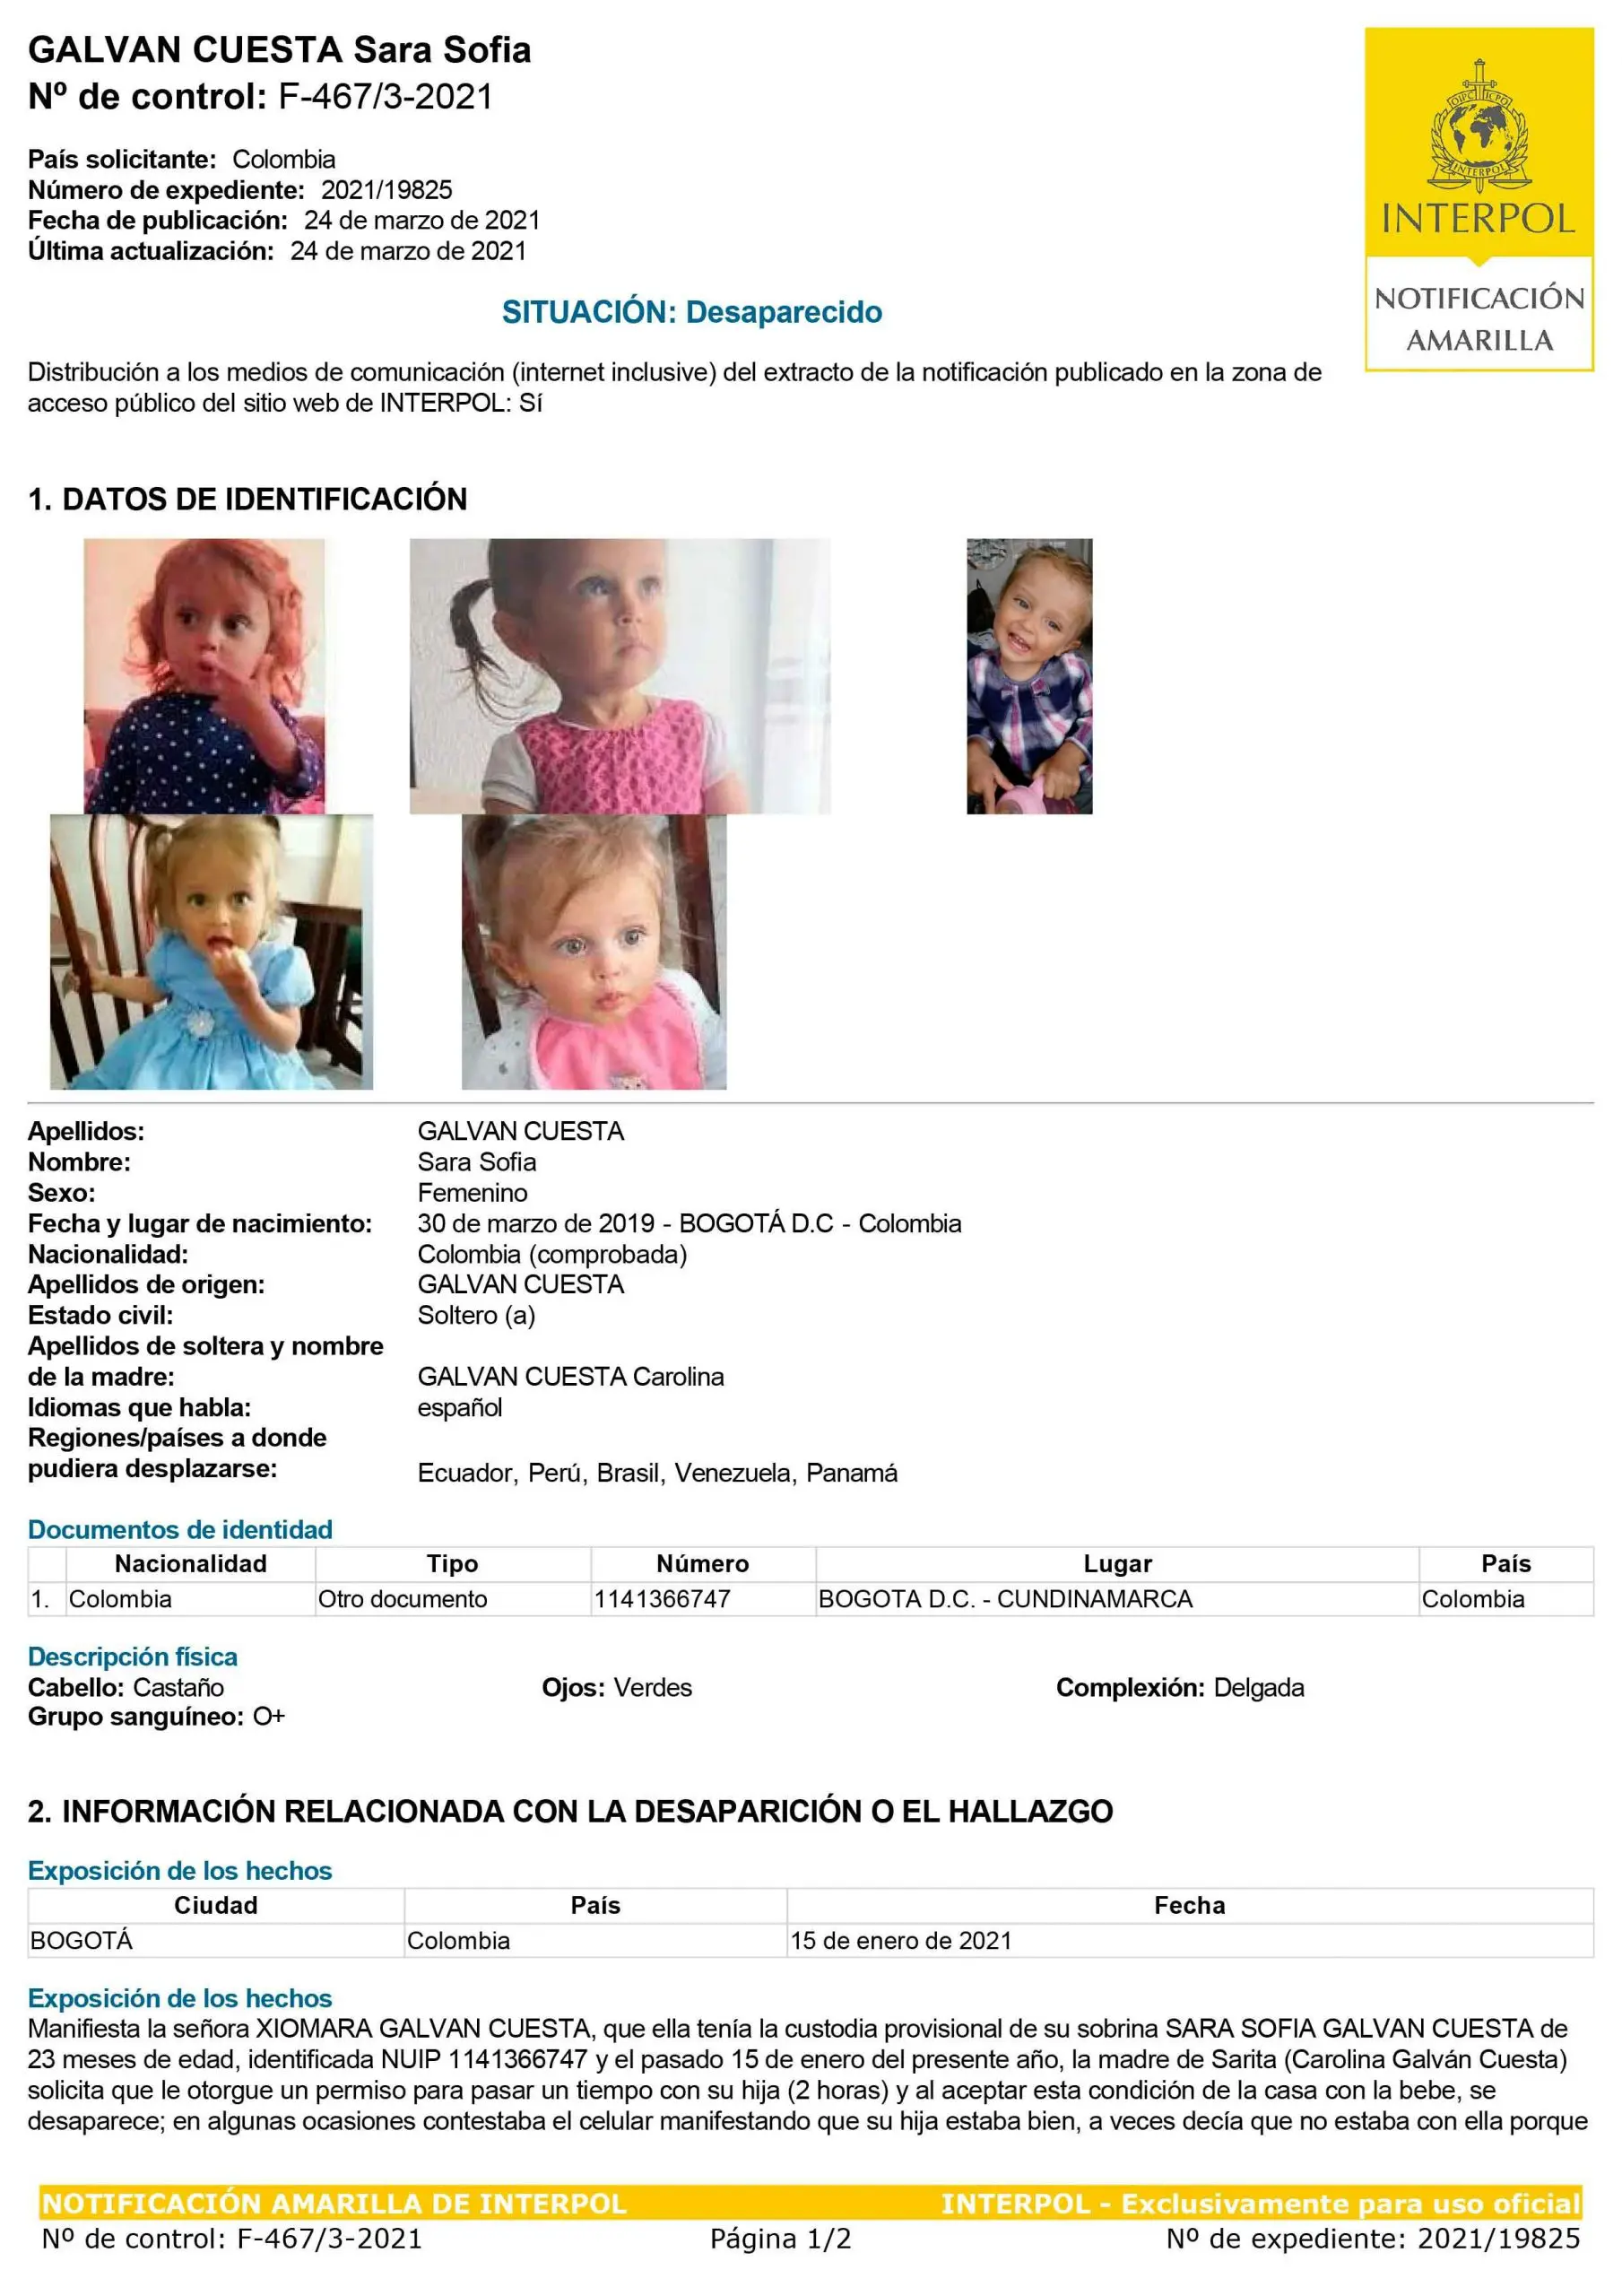 Interpol expide circular amarilla para ubicar a la niña Sara Sofía en 196 países